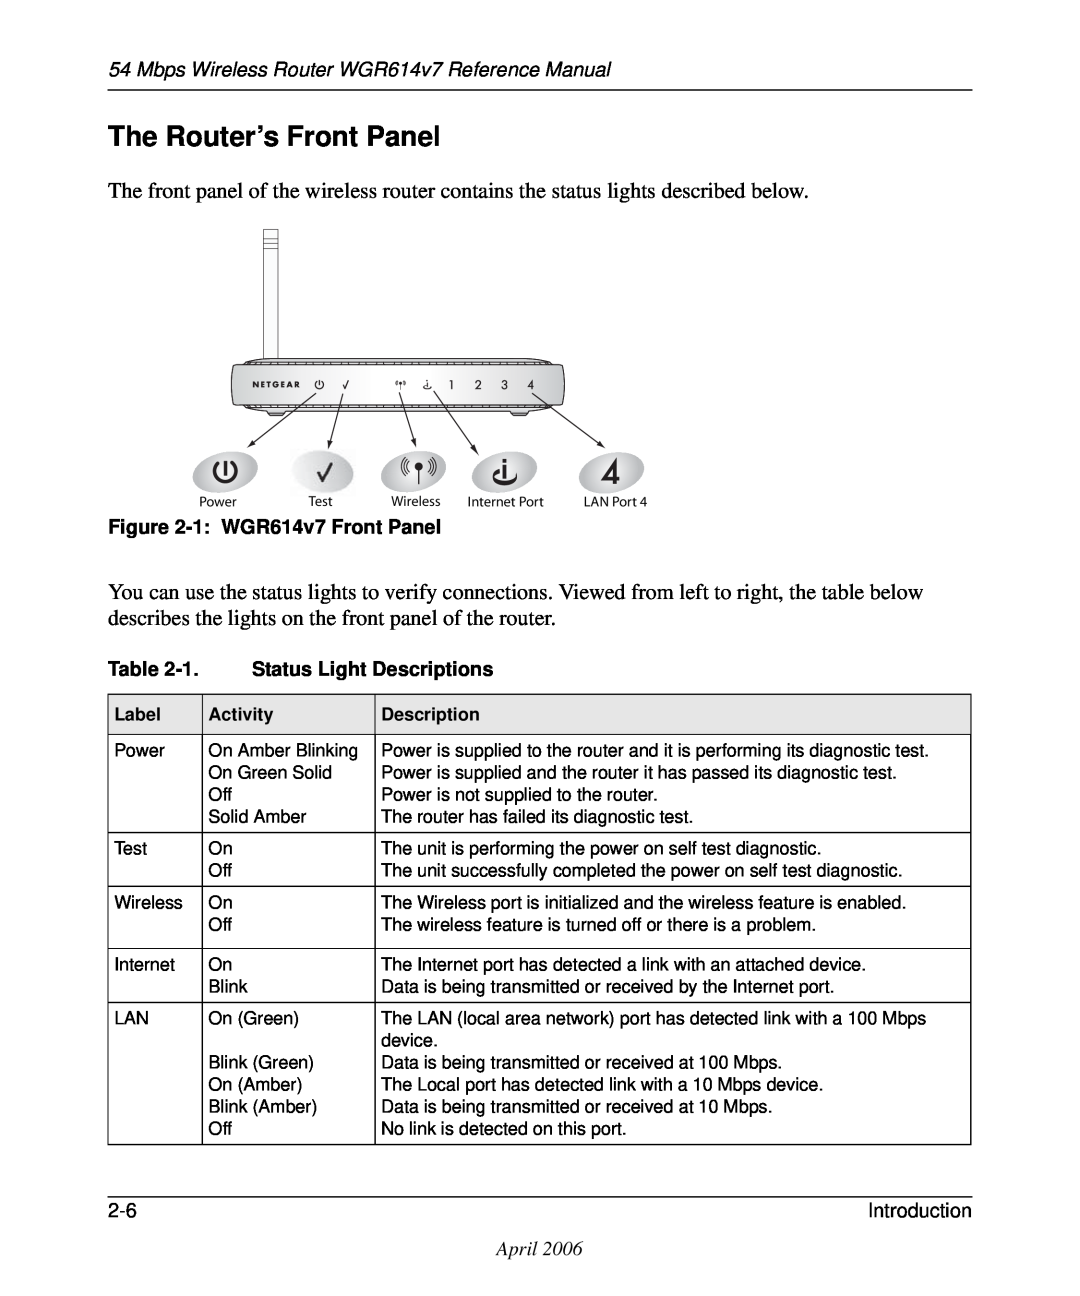 NETGEAR manual The Router’s Front Panel, 1 WGR614v7 Front Panel, Status Light Descriptions 